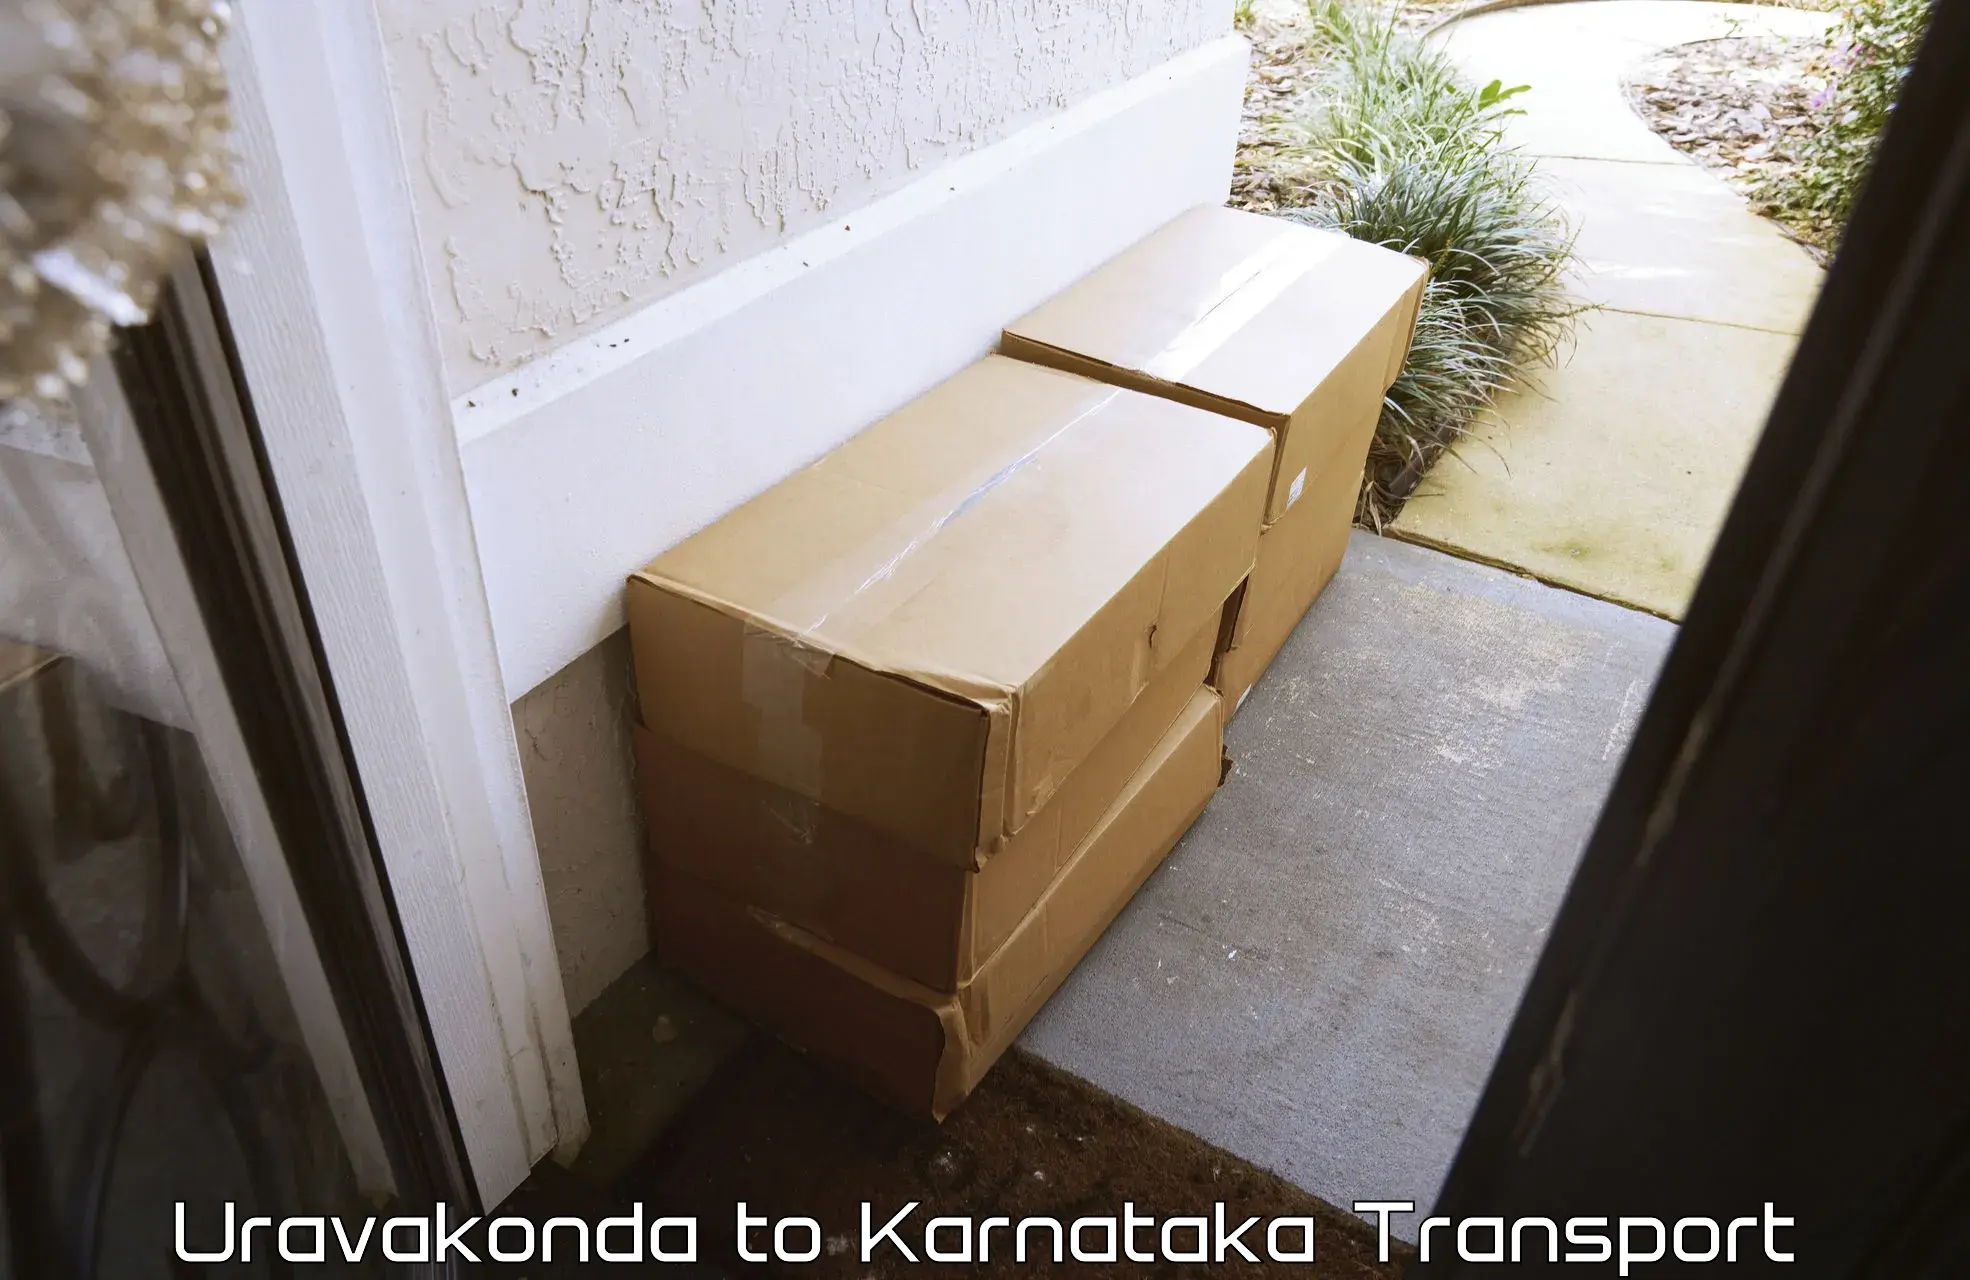 Goods delivery service Uravakonda to Chikkamagalur